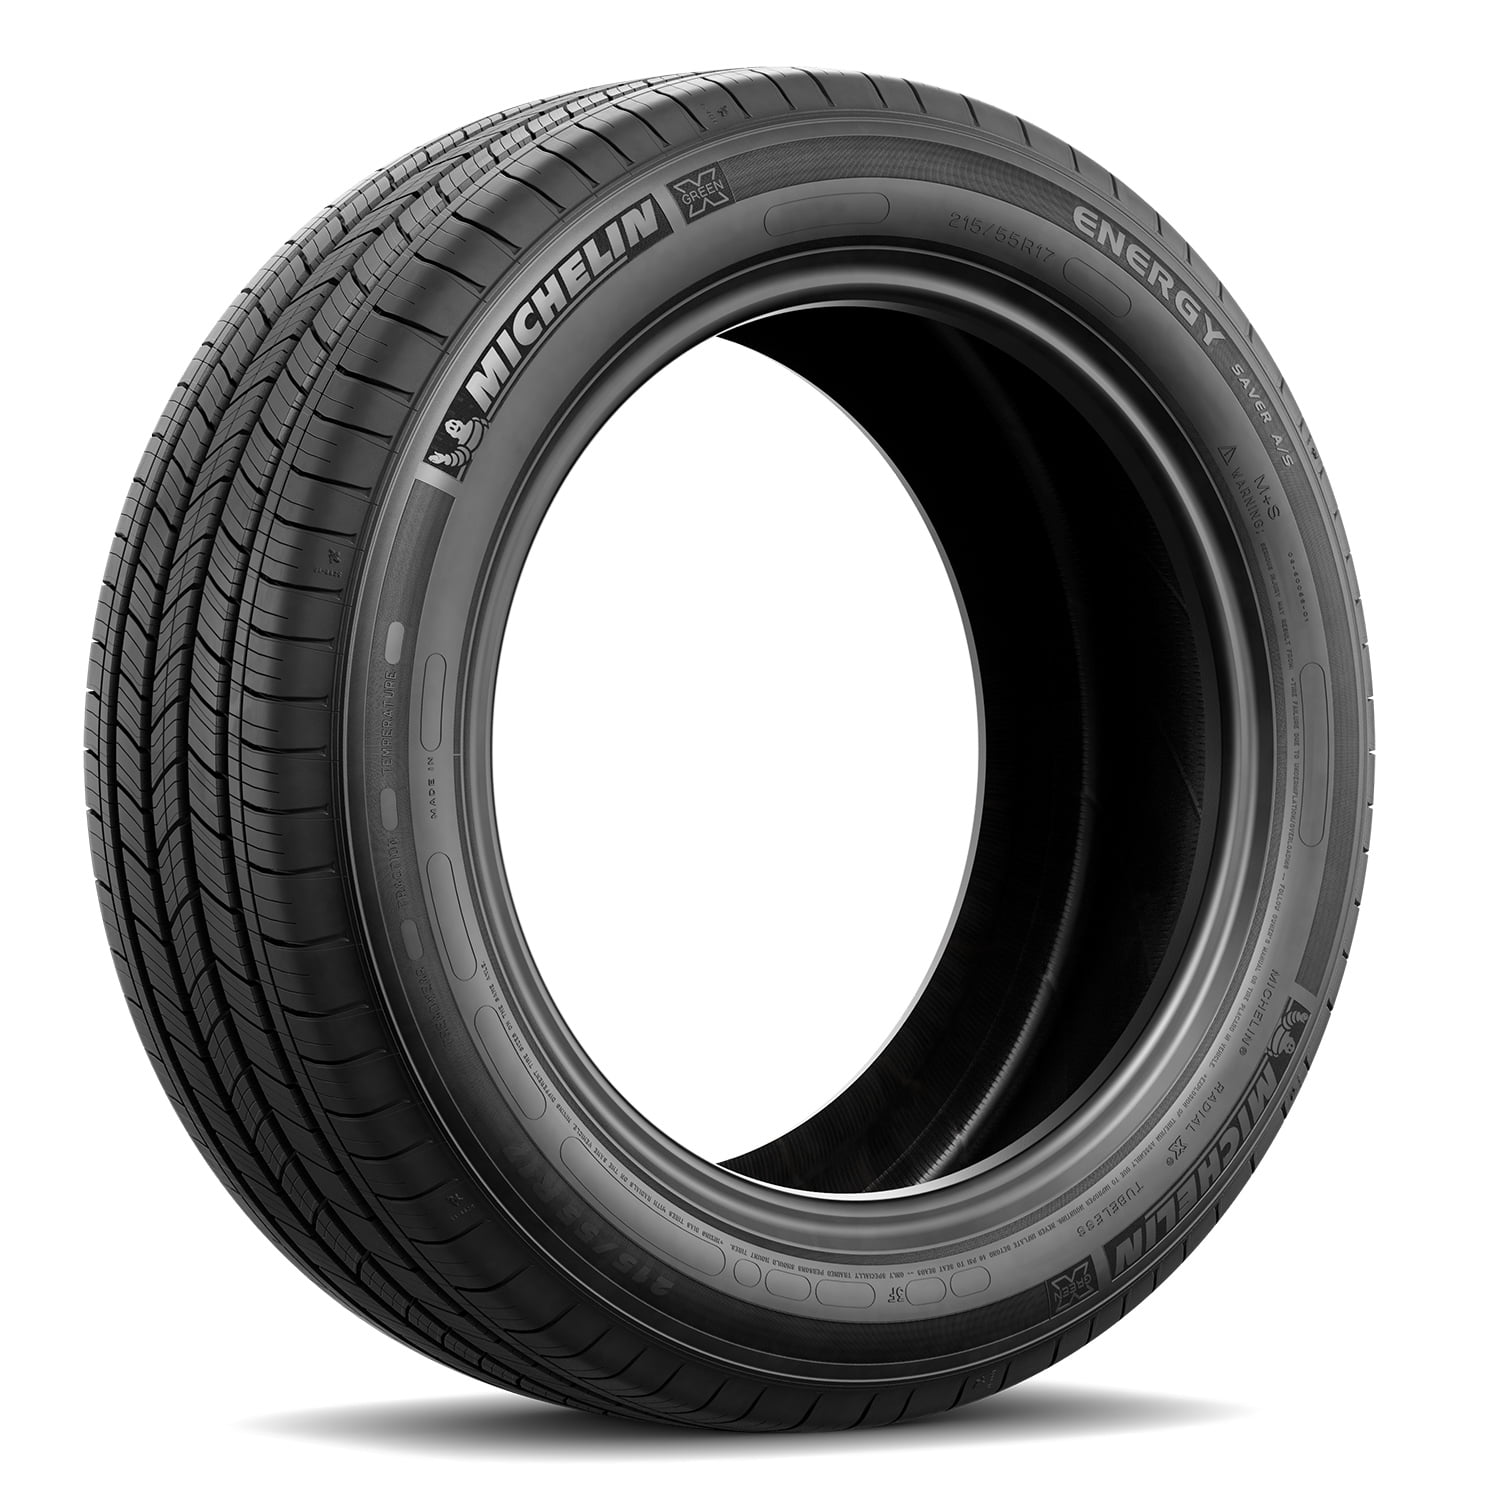 Michelin Energy Saver A/S All-Season P225/65R17 100T Tire